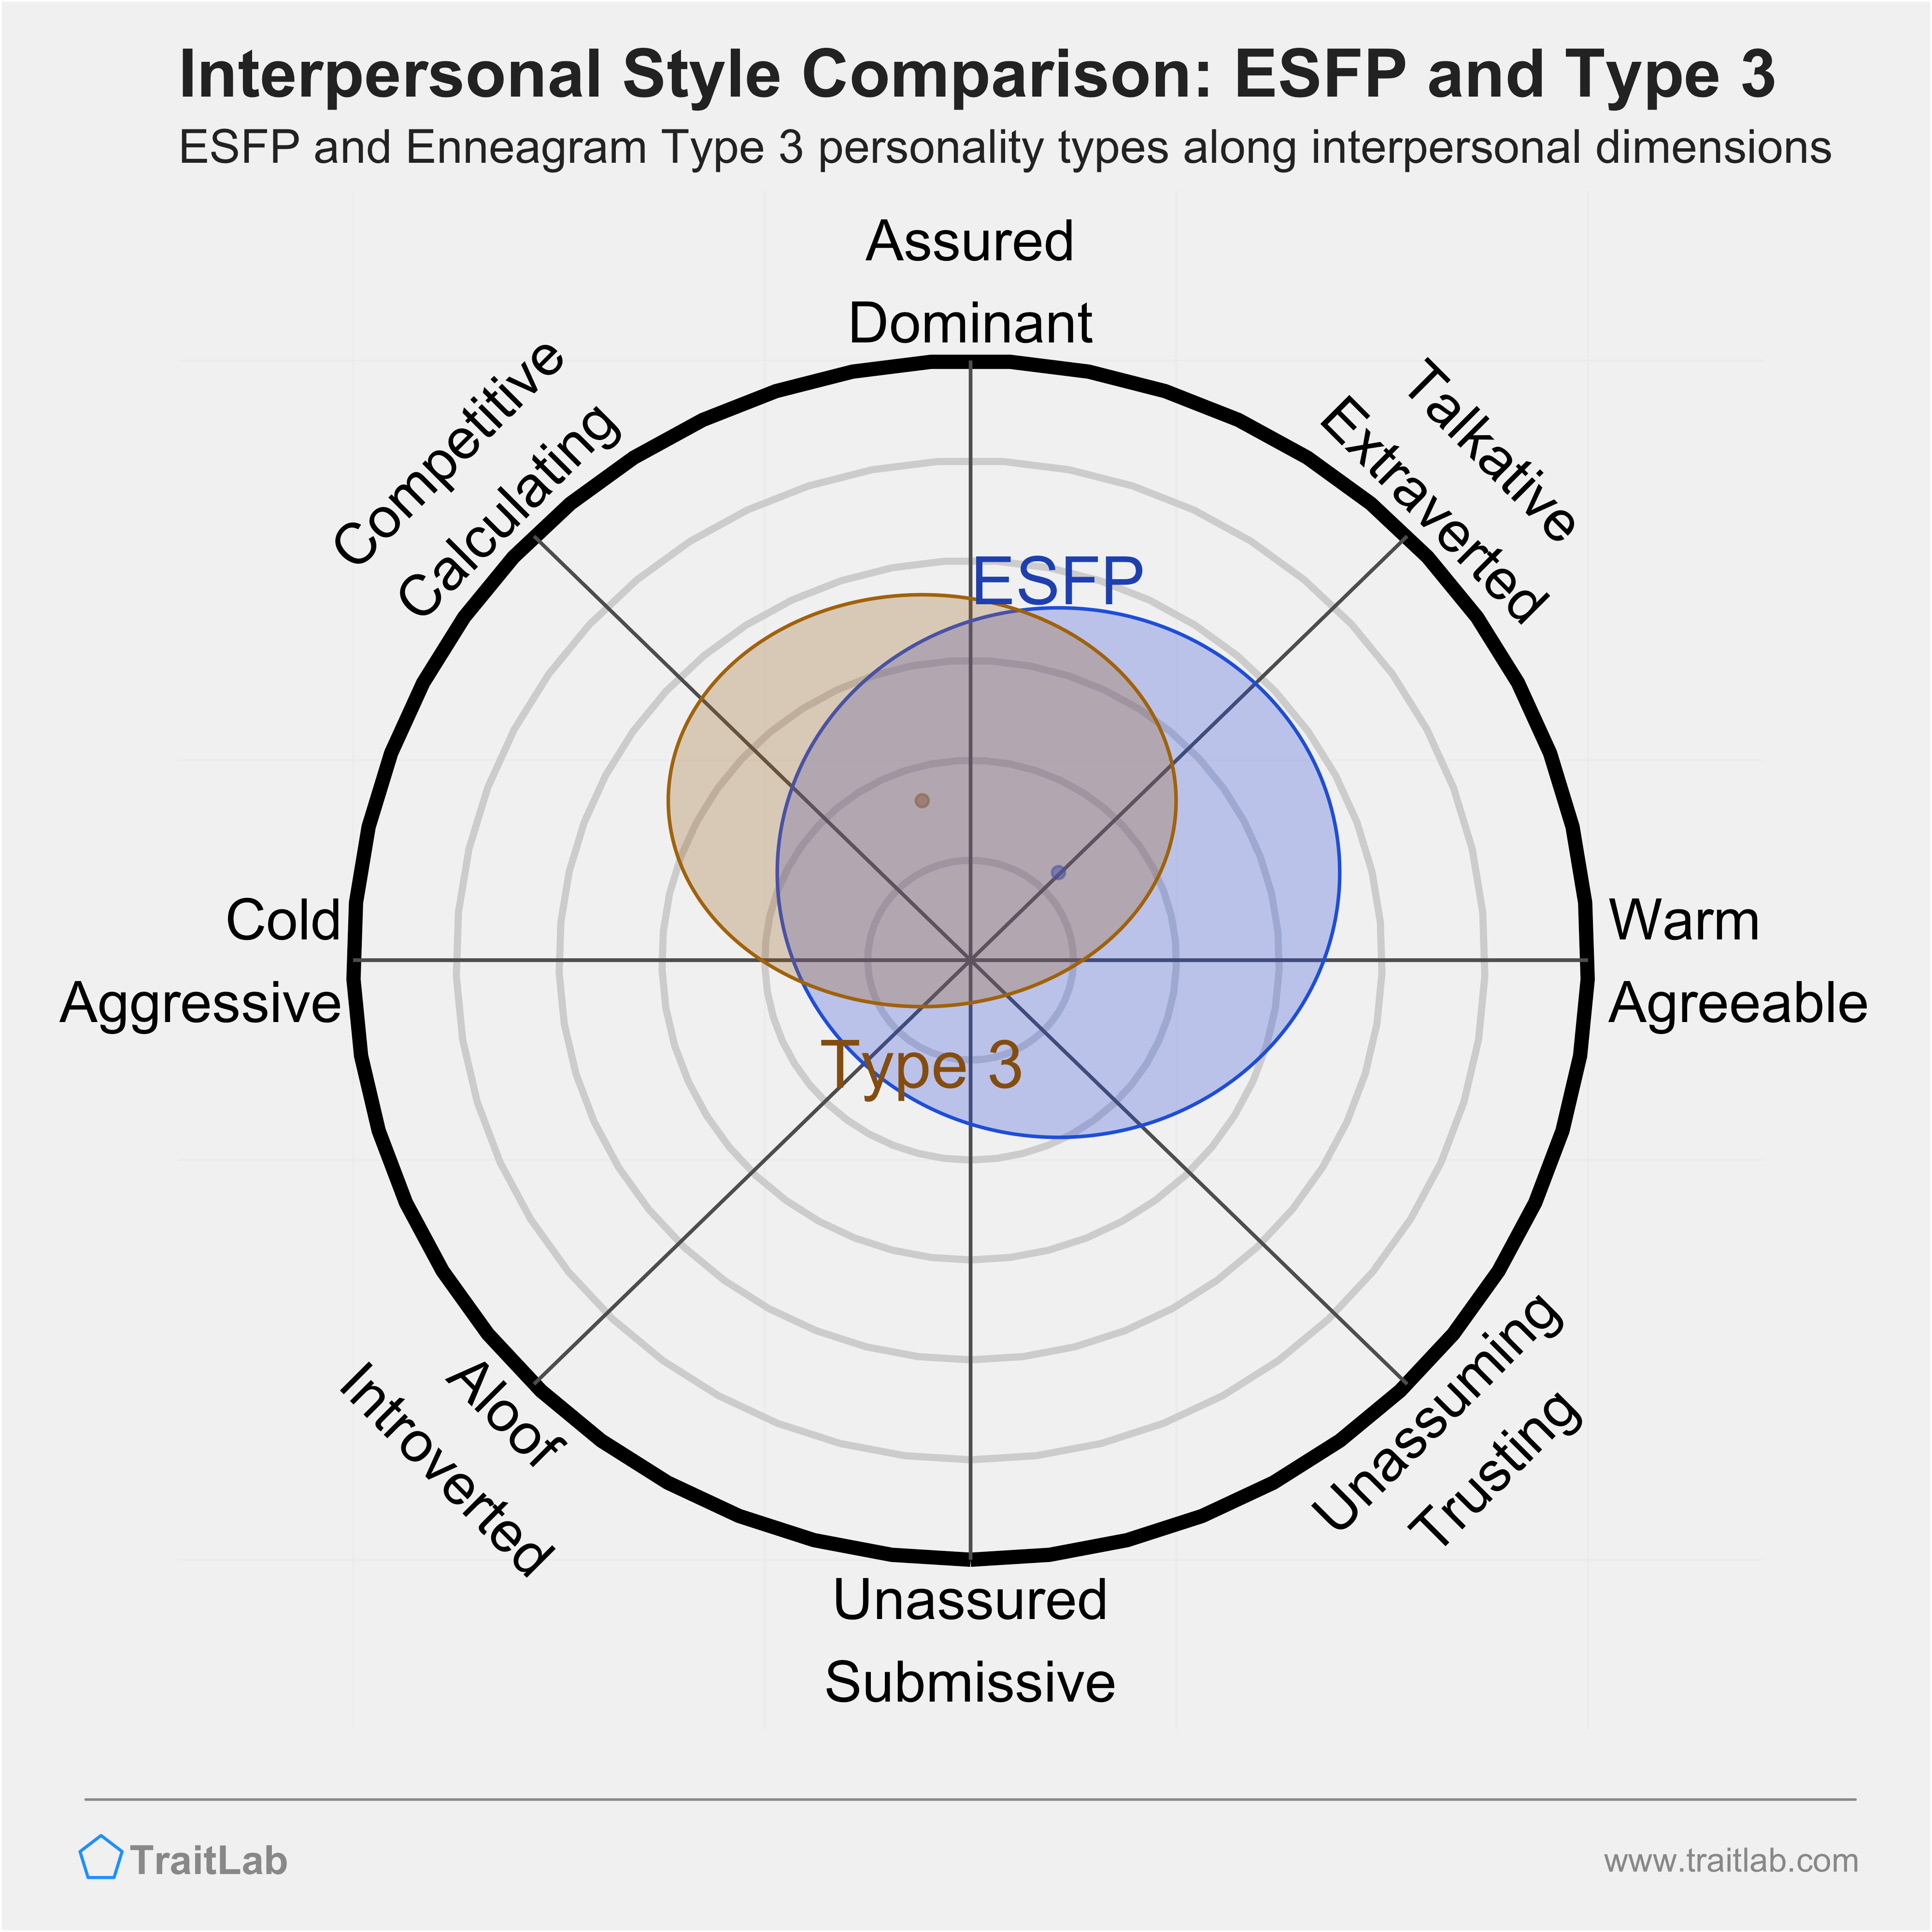 Enneagram ESFP and Type 3 comparison across interpersonal dimensions